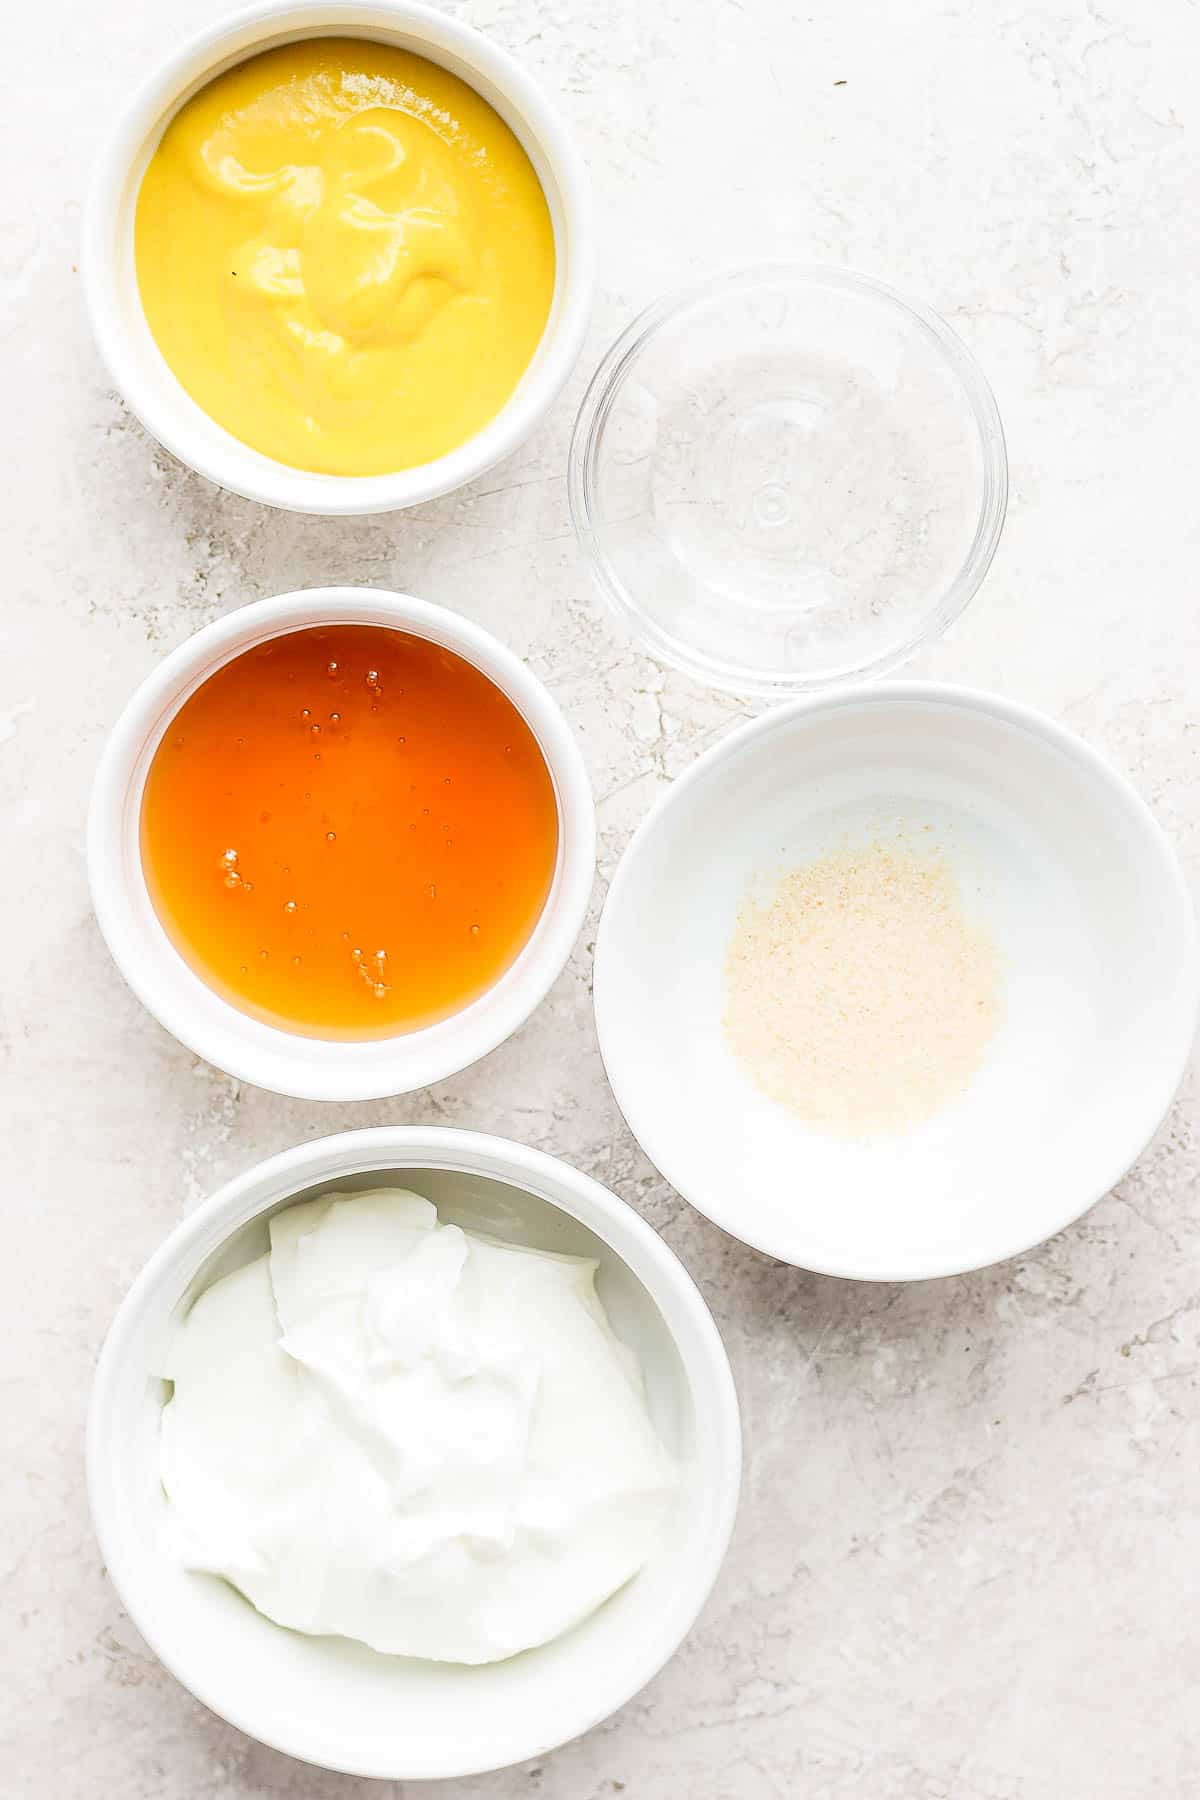 Ingredients for honey mustard dressing in separate bowls.